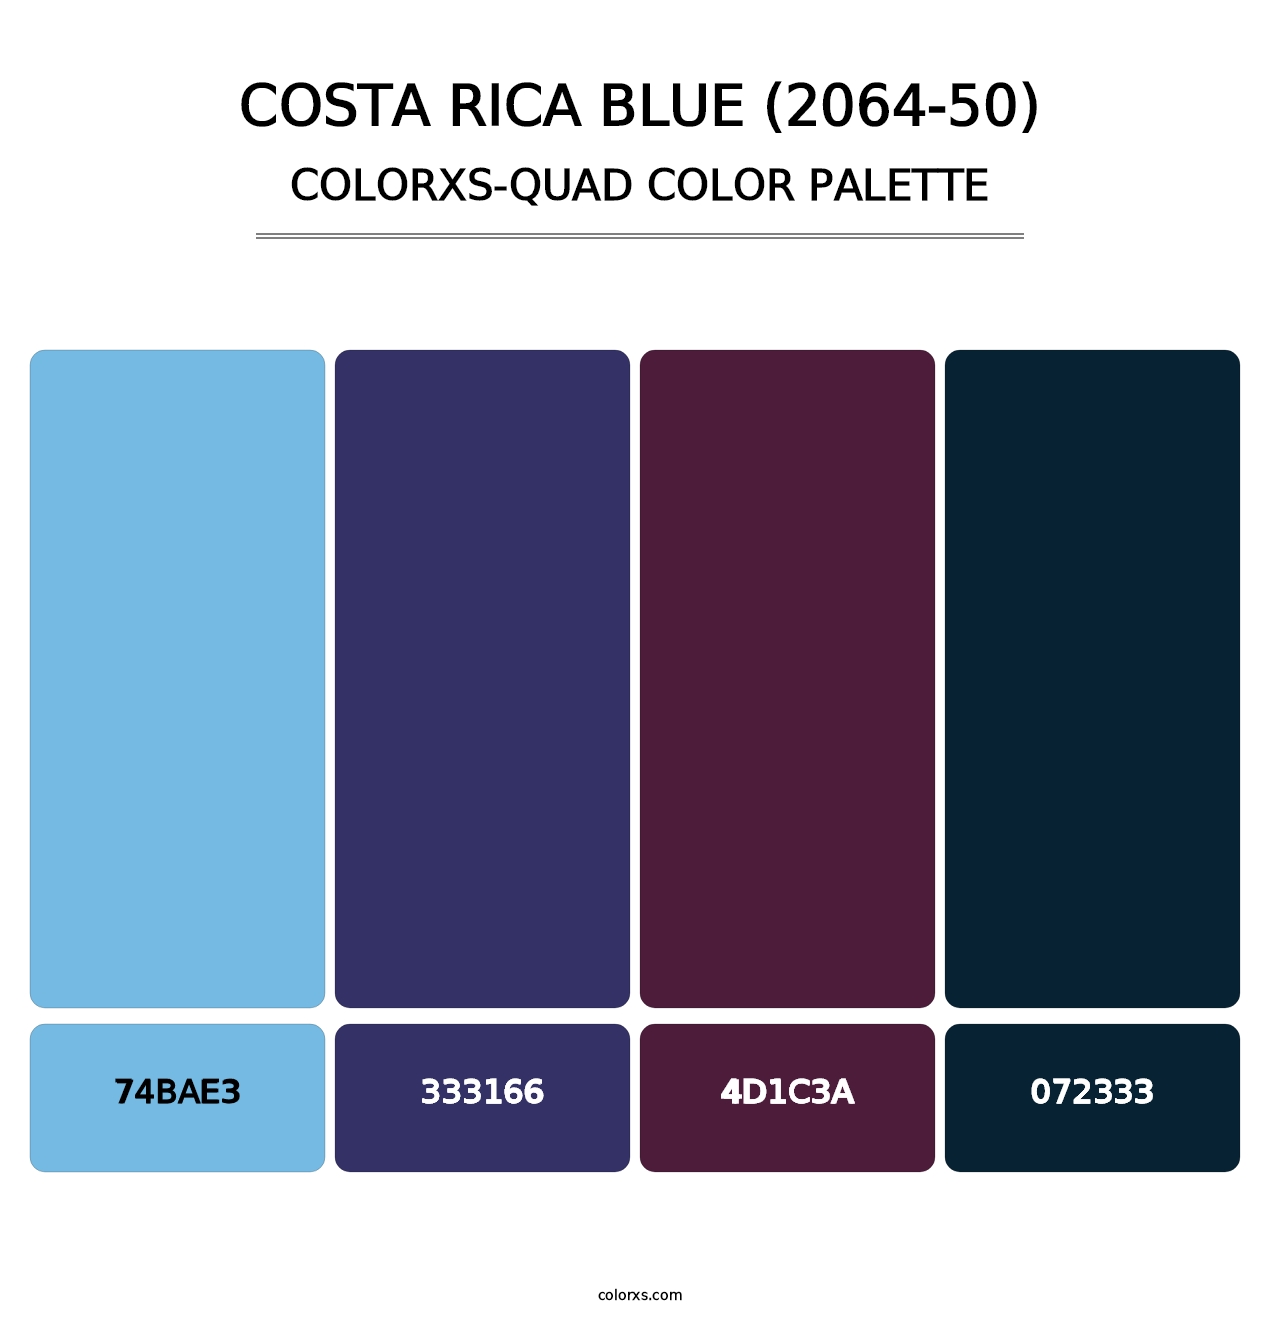 Costa Rica Blue (2064-50) - Colorxs Quad Palette